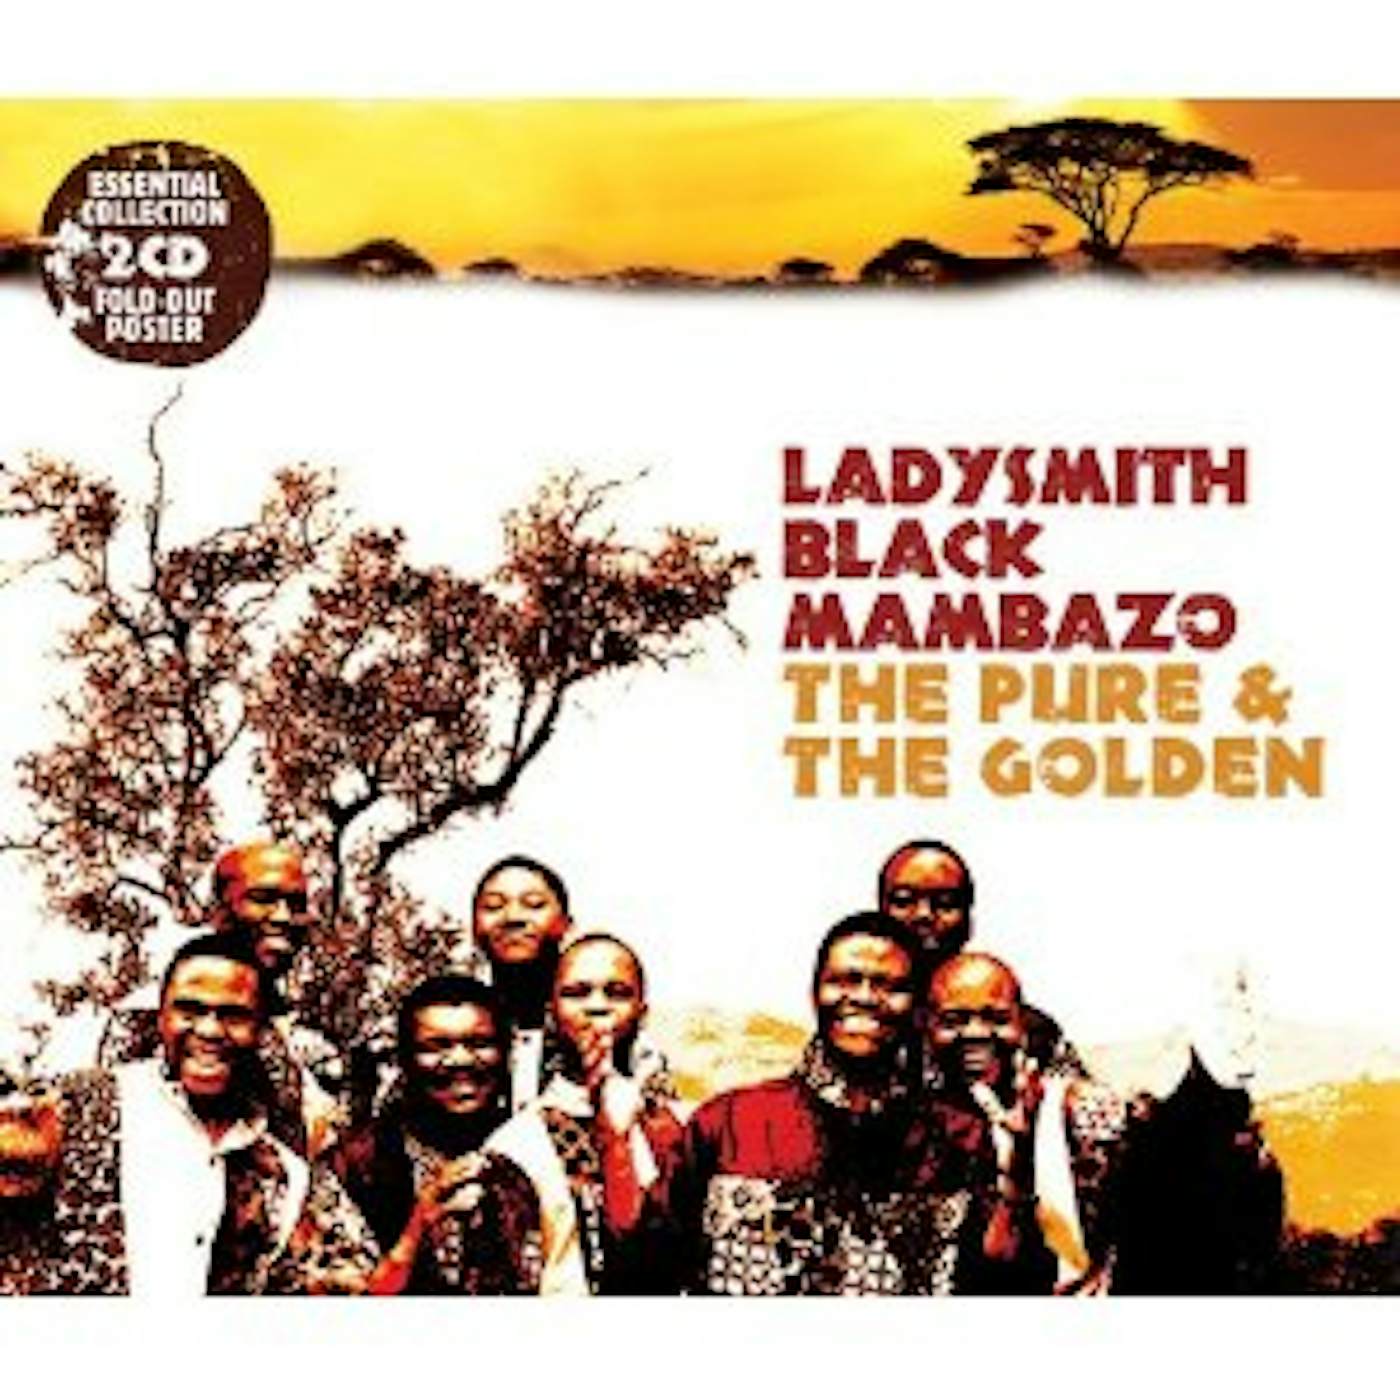 Ladysmith Black Mambazo PURE & THE GOLDEN CD